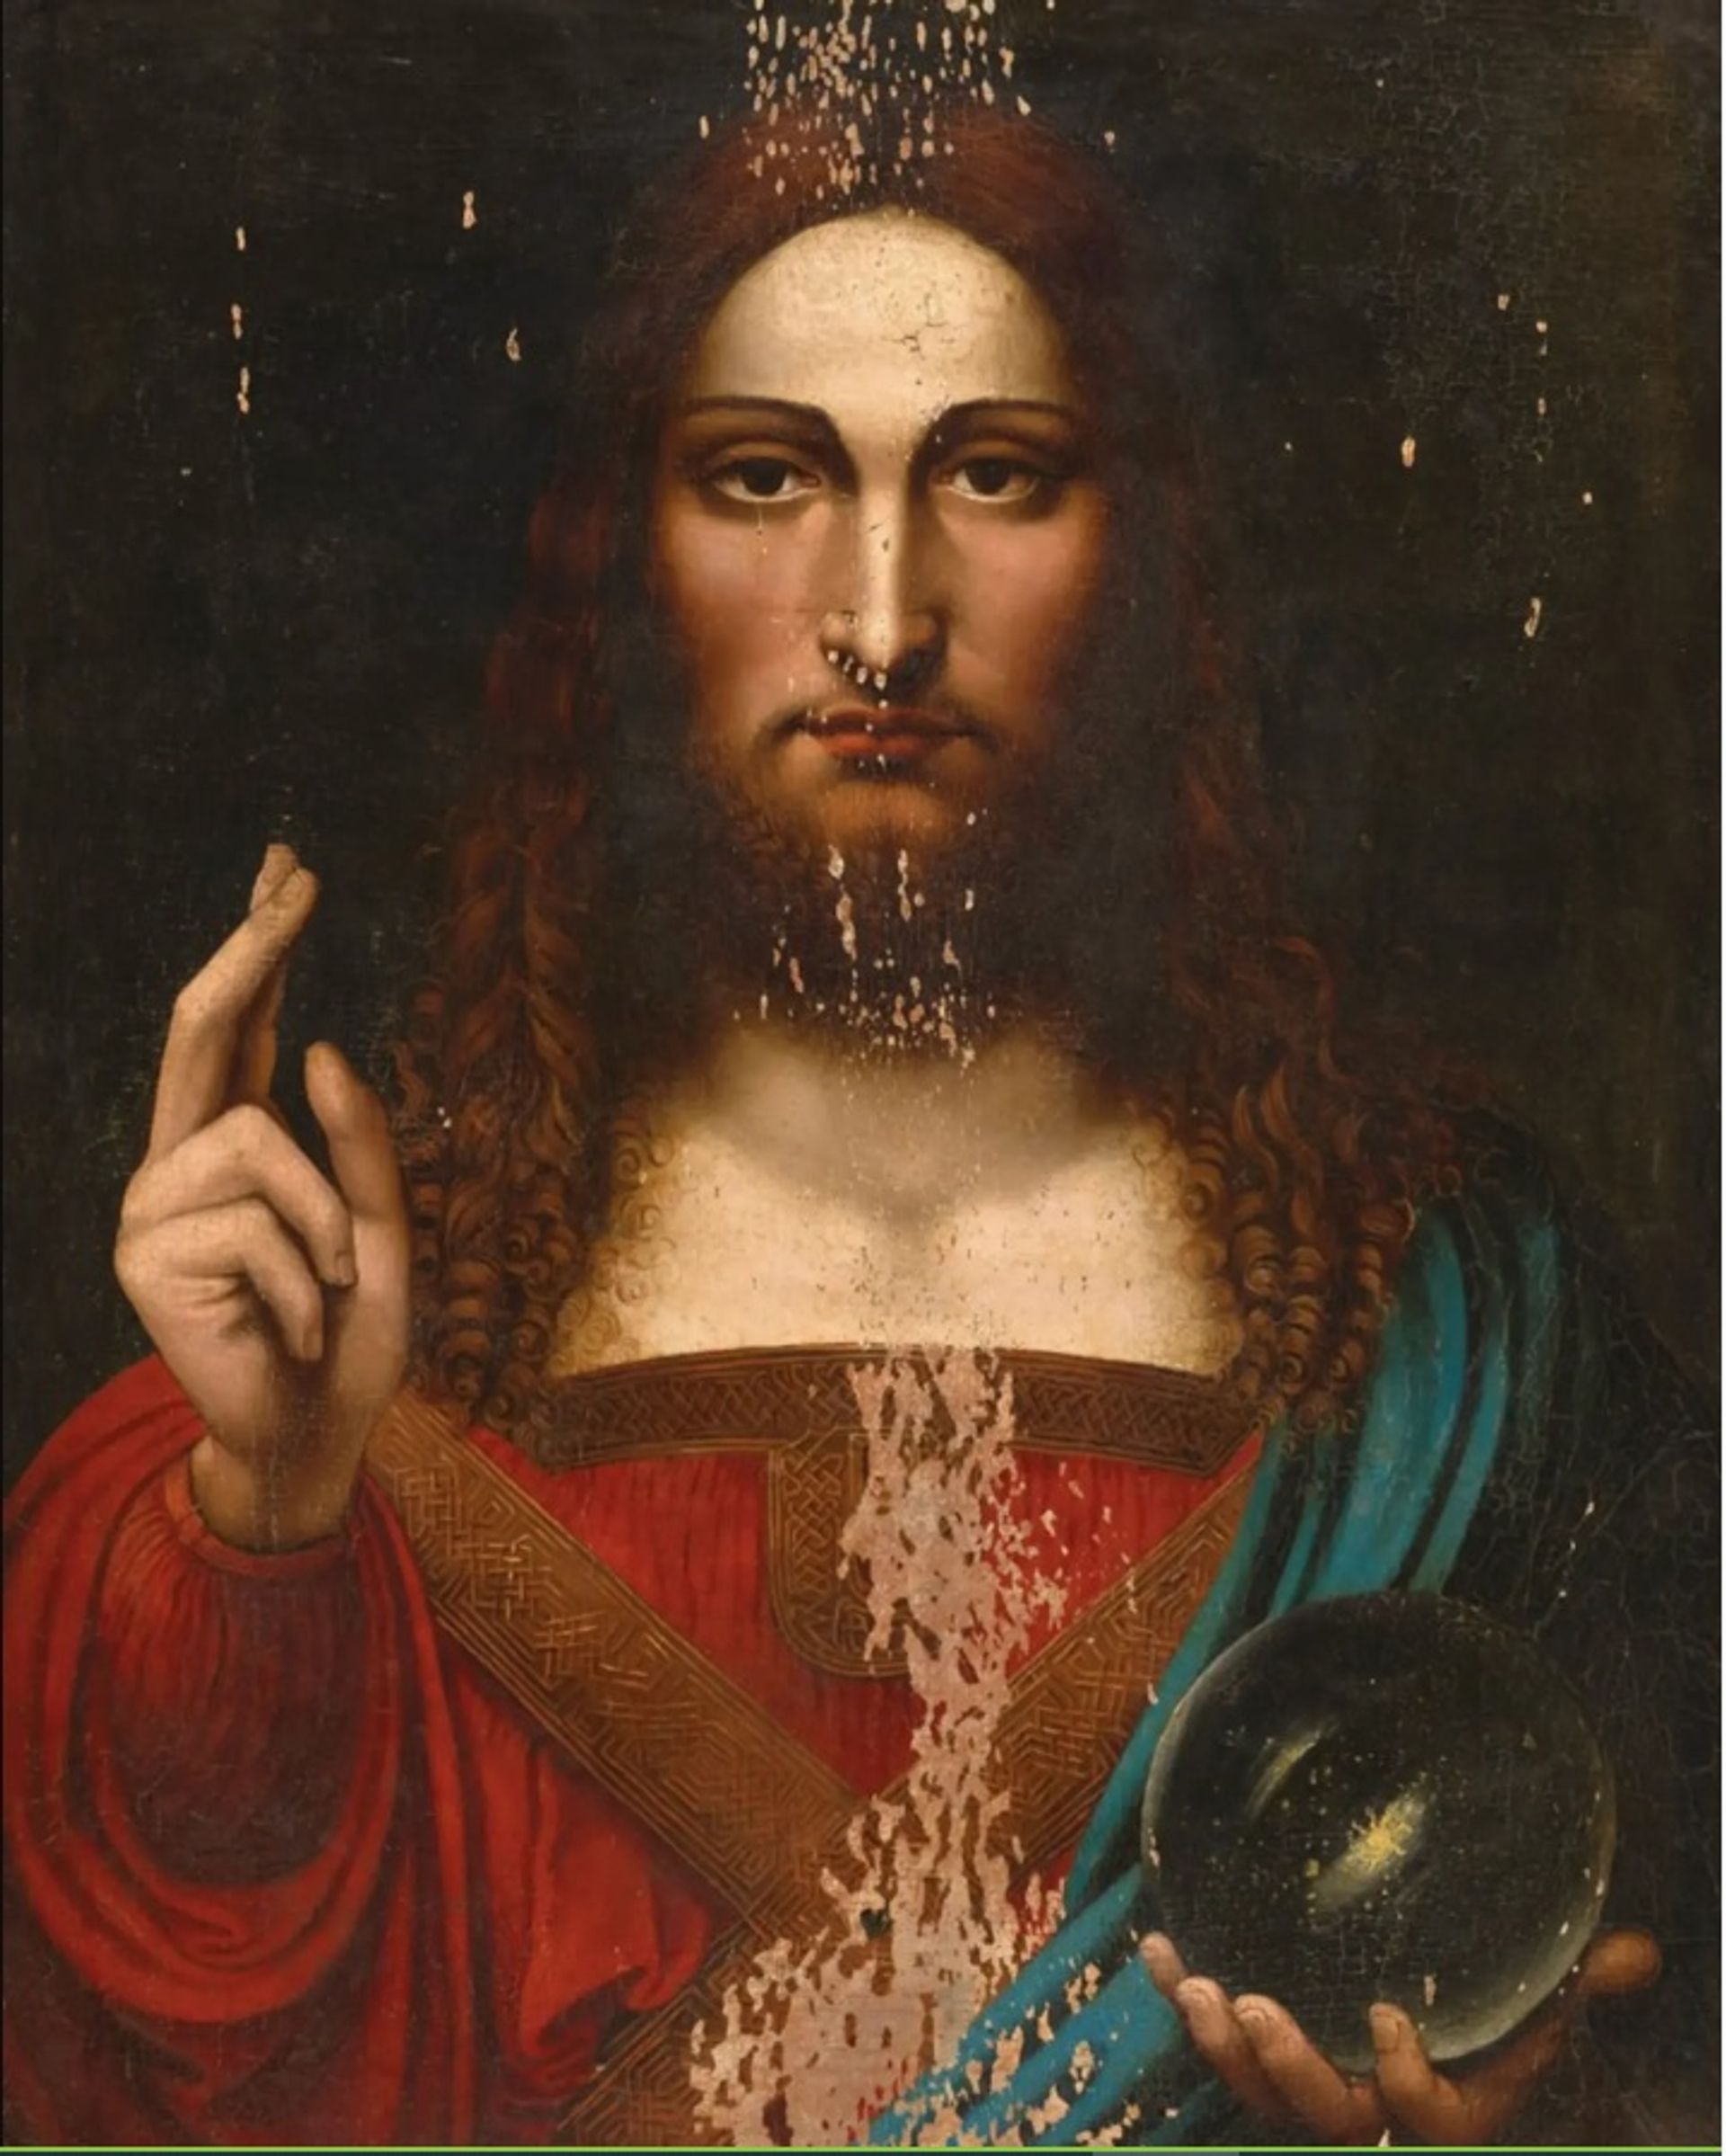 Salvator Mundi, אחרי לאונרדו (בסביבות 1600), נמכר במיליון יורו בכריסטי'ס

באדיבות כריסטי'ס